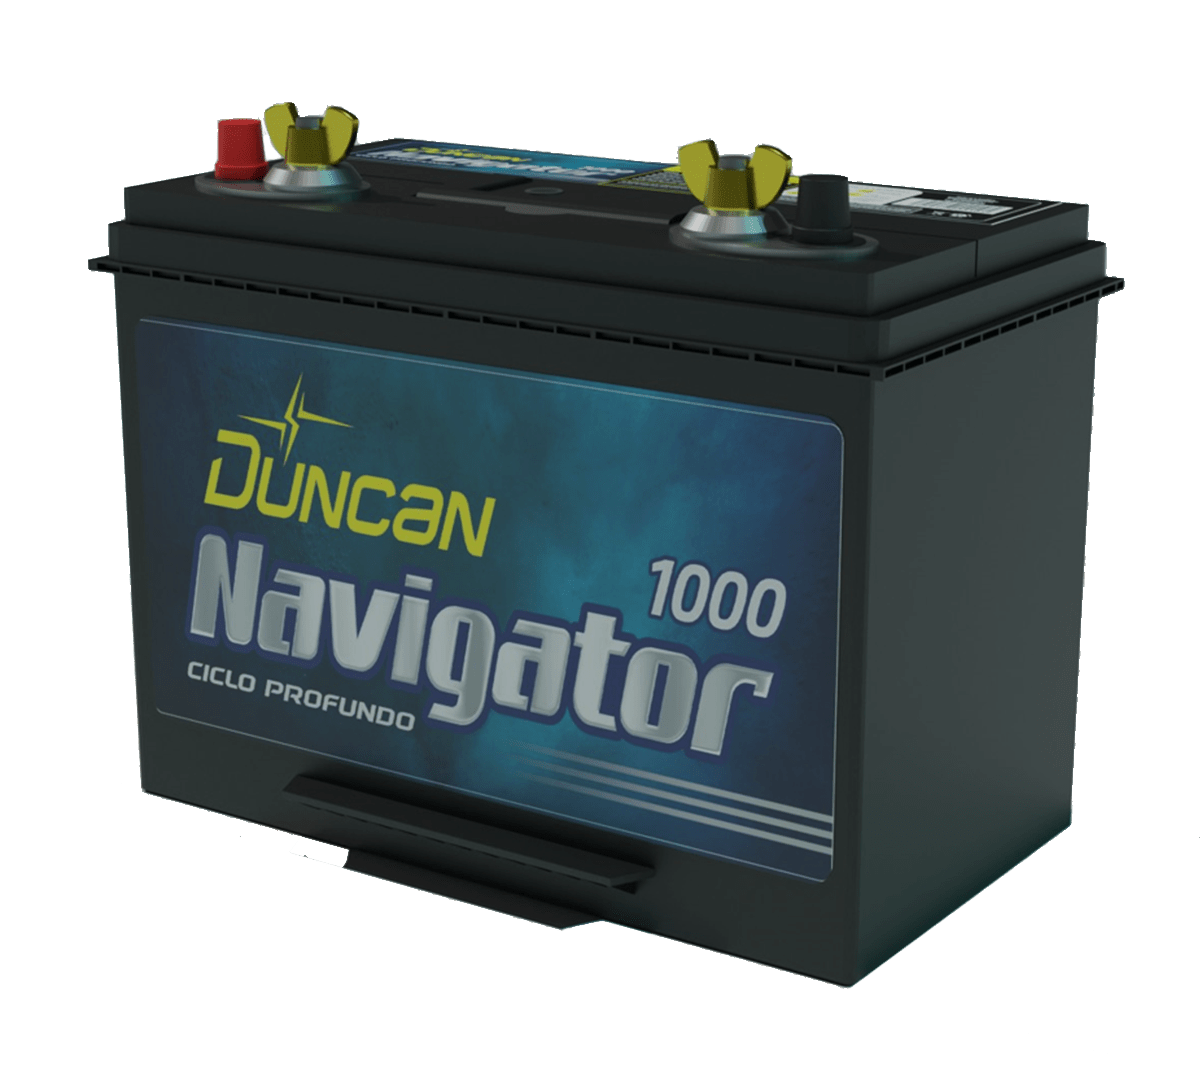 duncan-Navigator